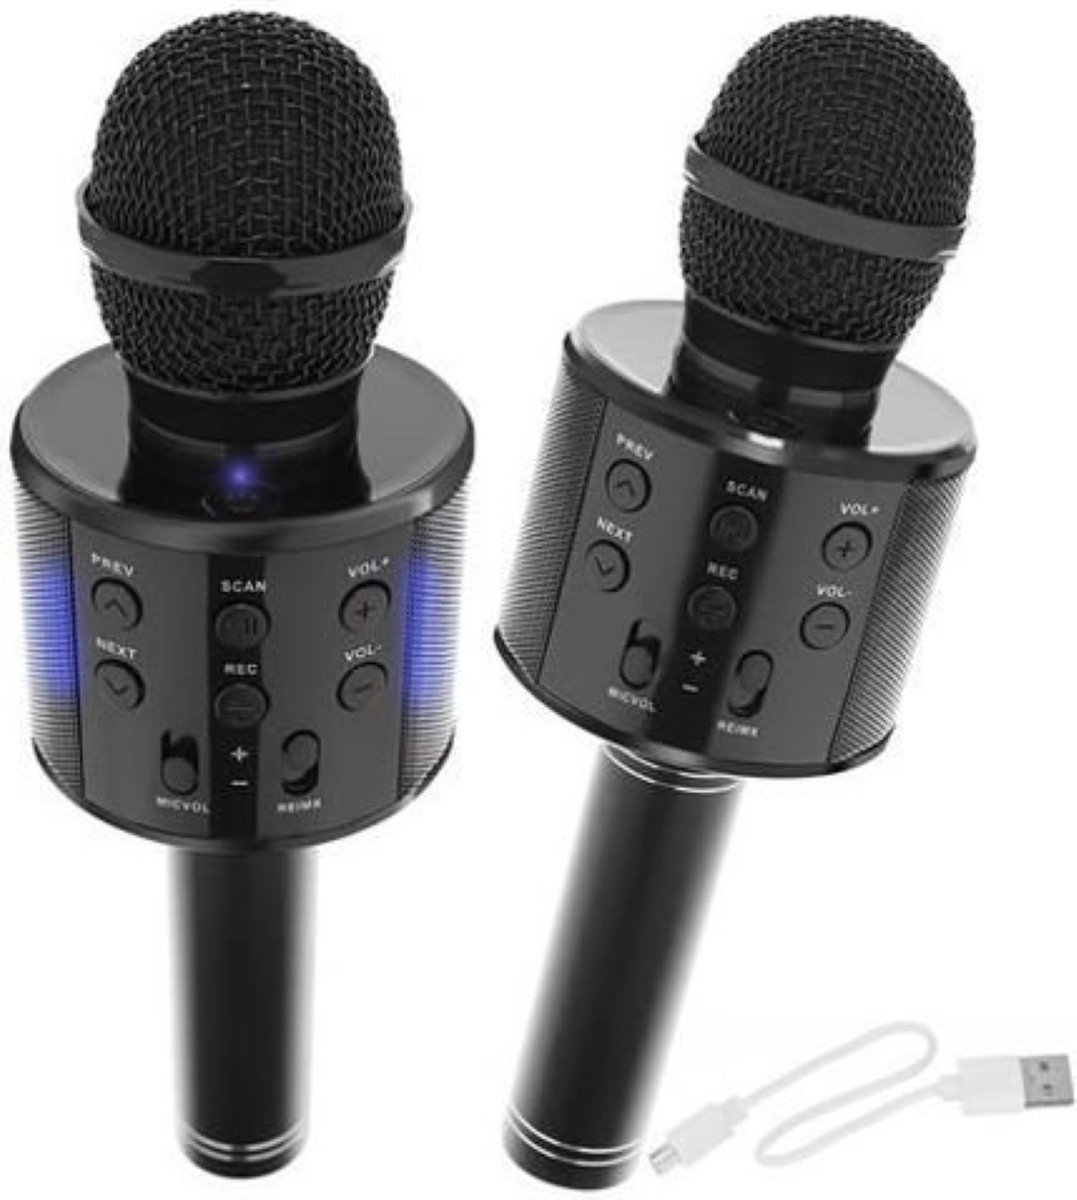 Oneiro's Luxe Karaoke microphone with black speaker